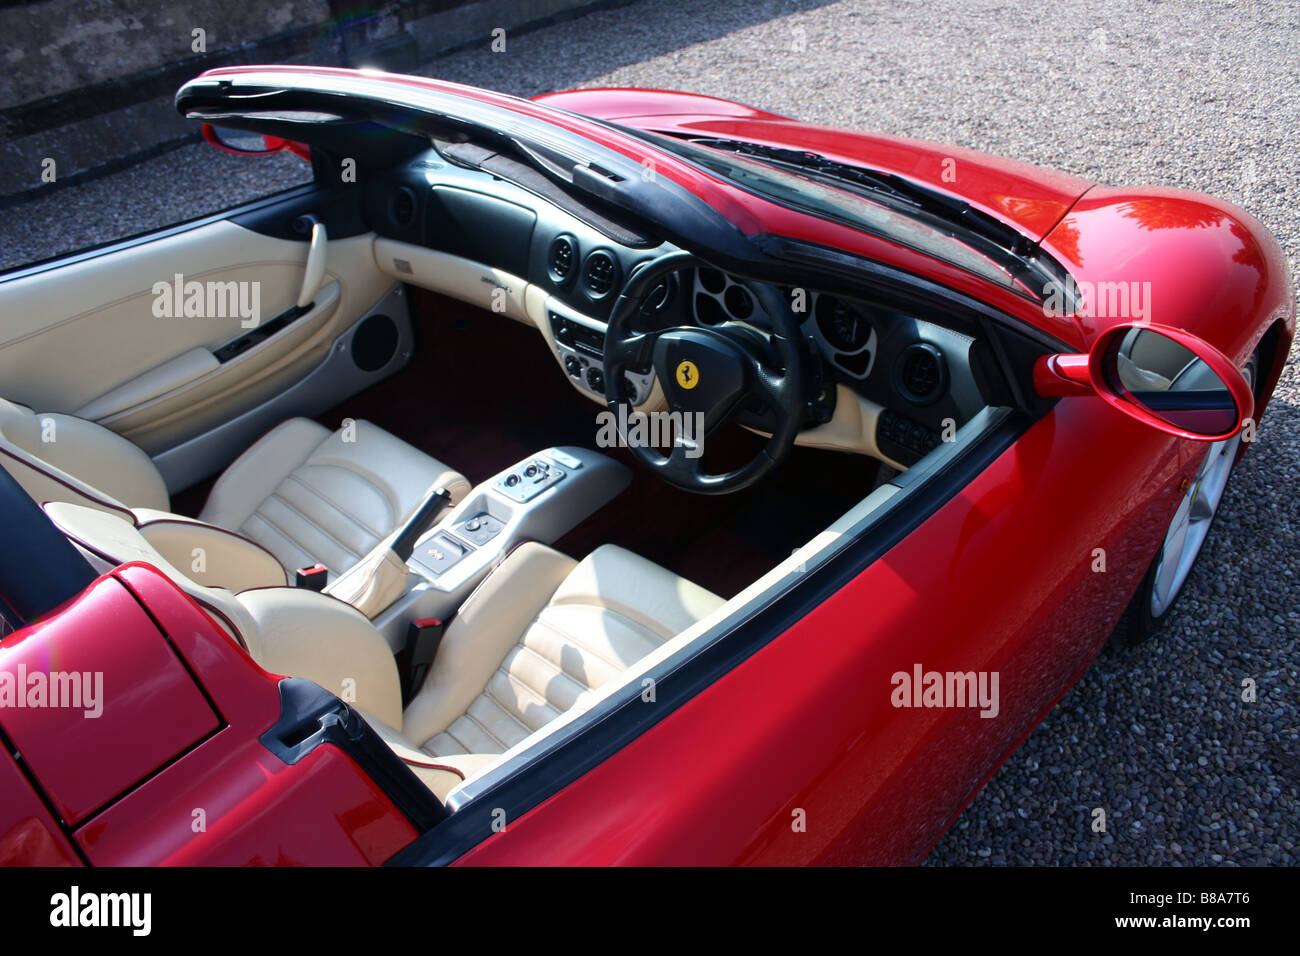 Classic red Ferrari 360 Spider F1 Stock Photo